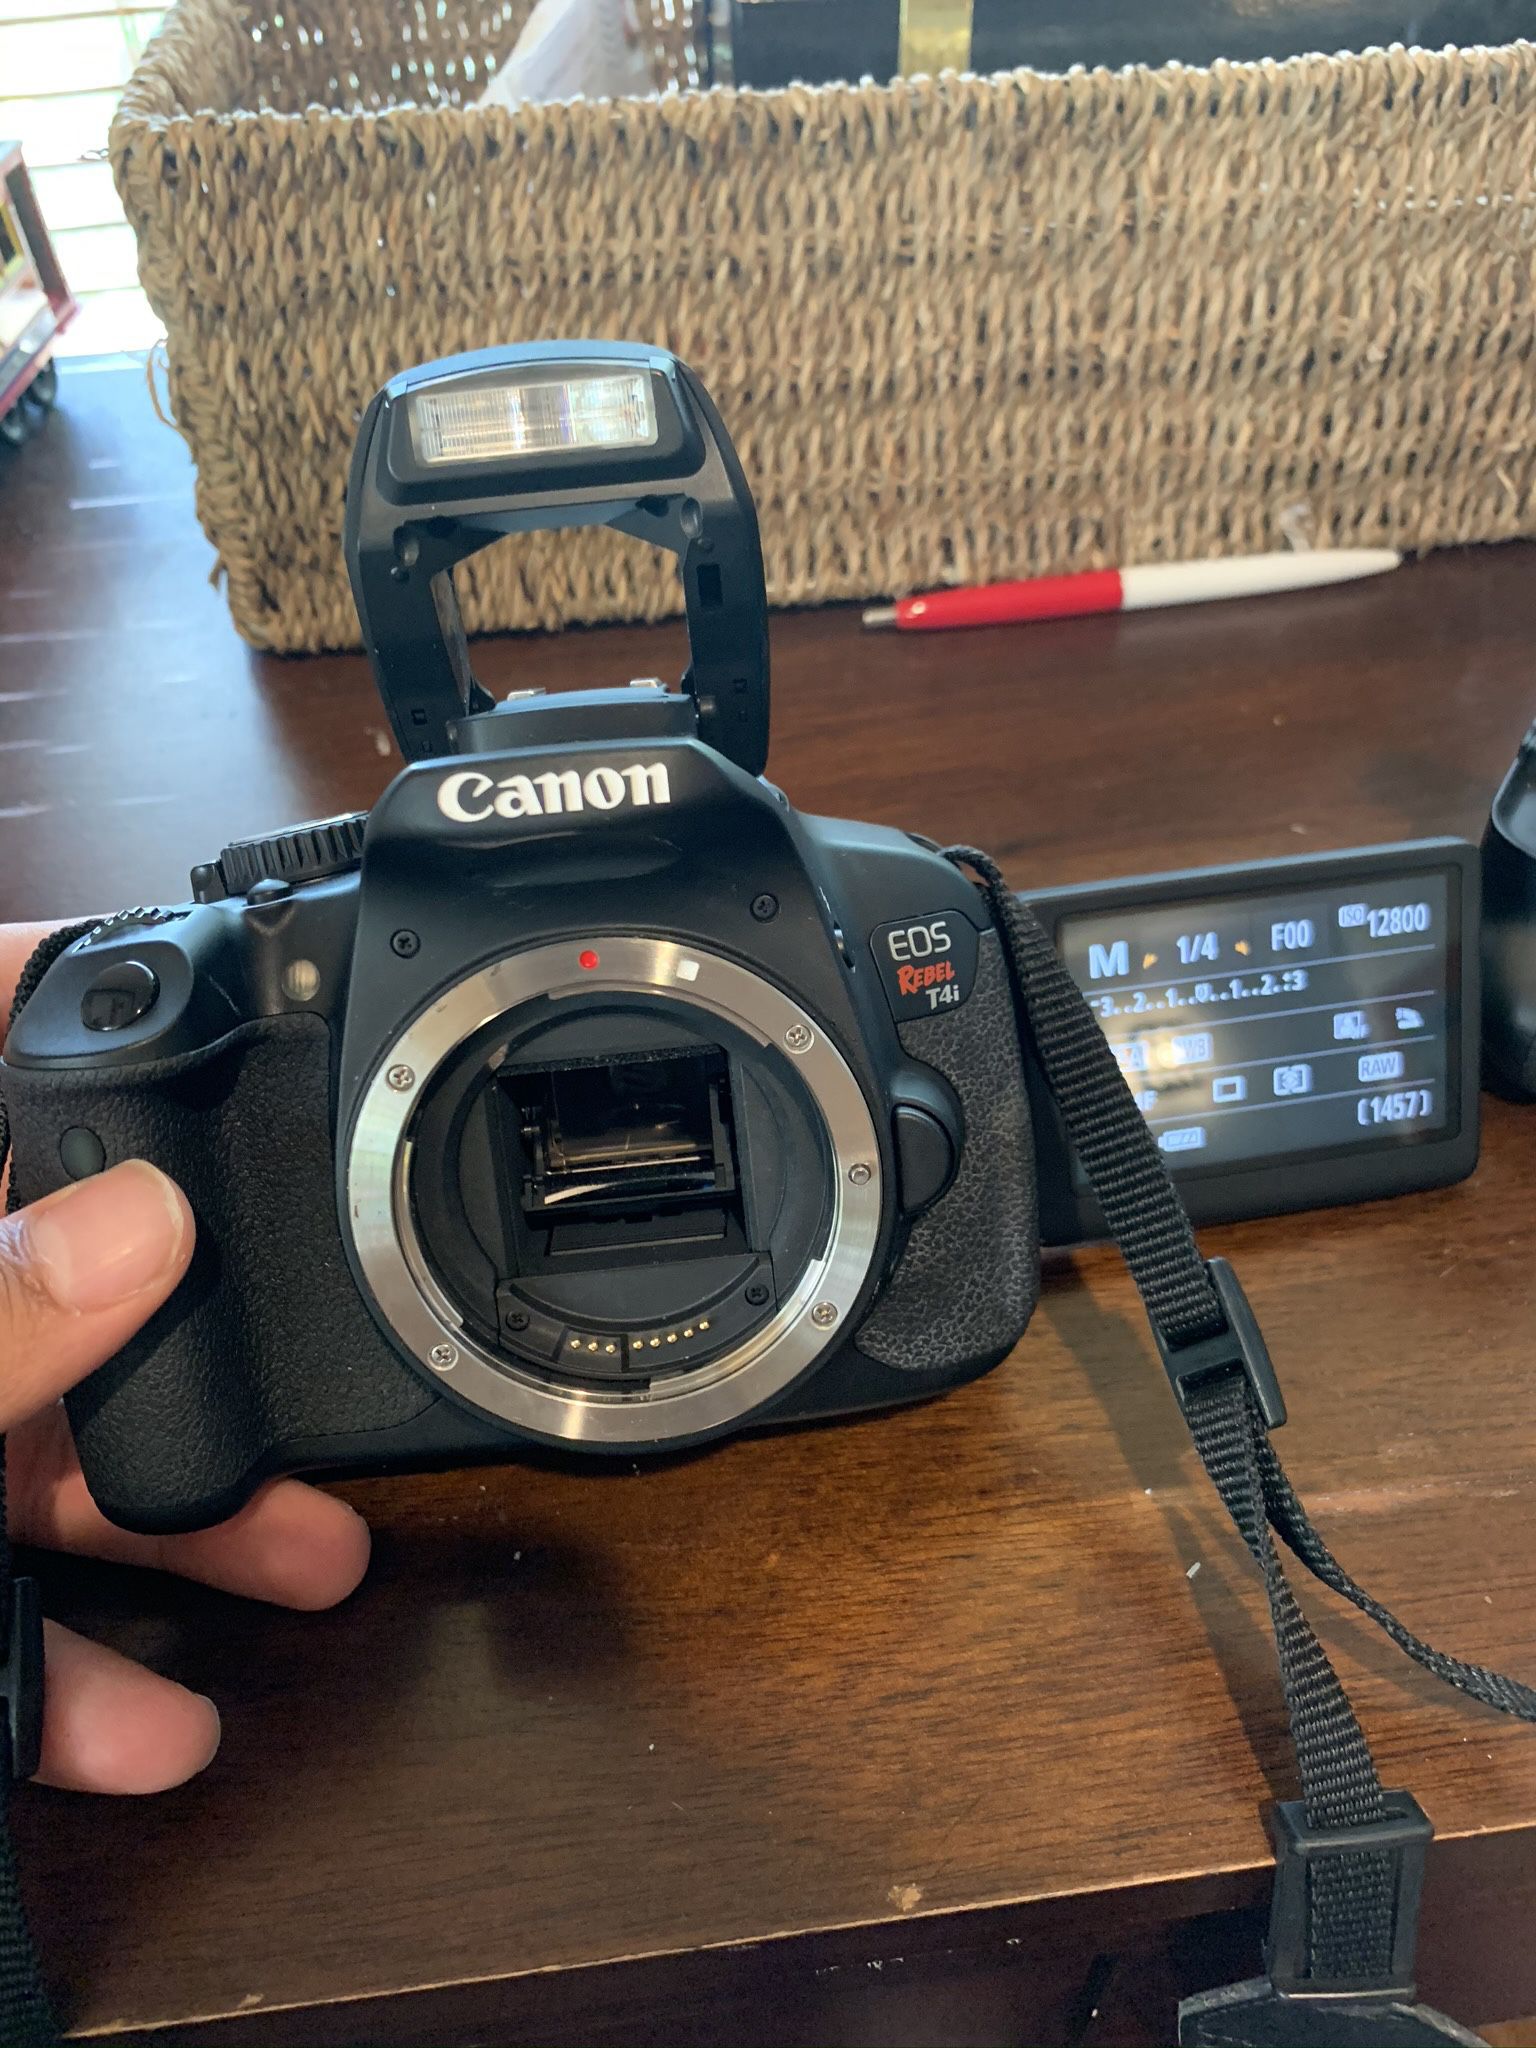 Canon Rebel T4i DSLR camera